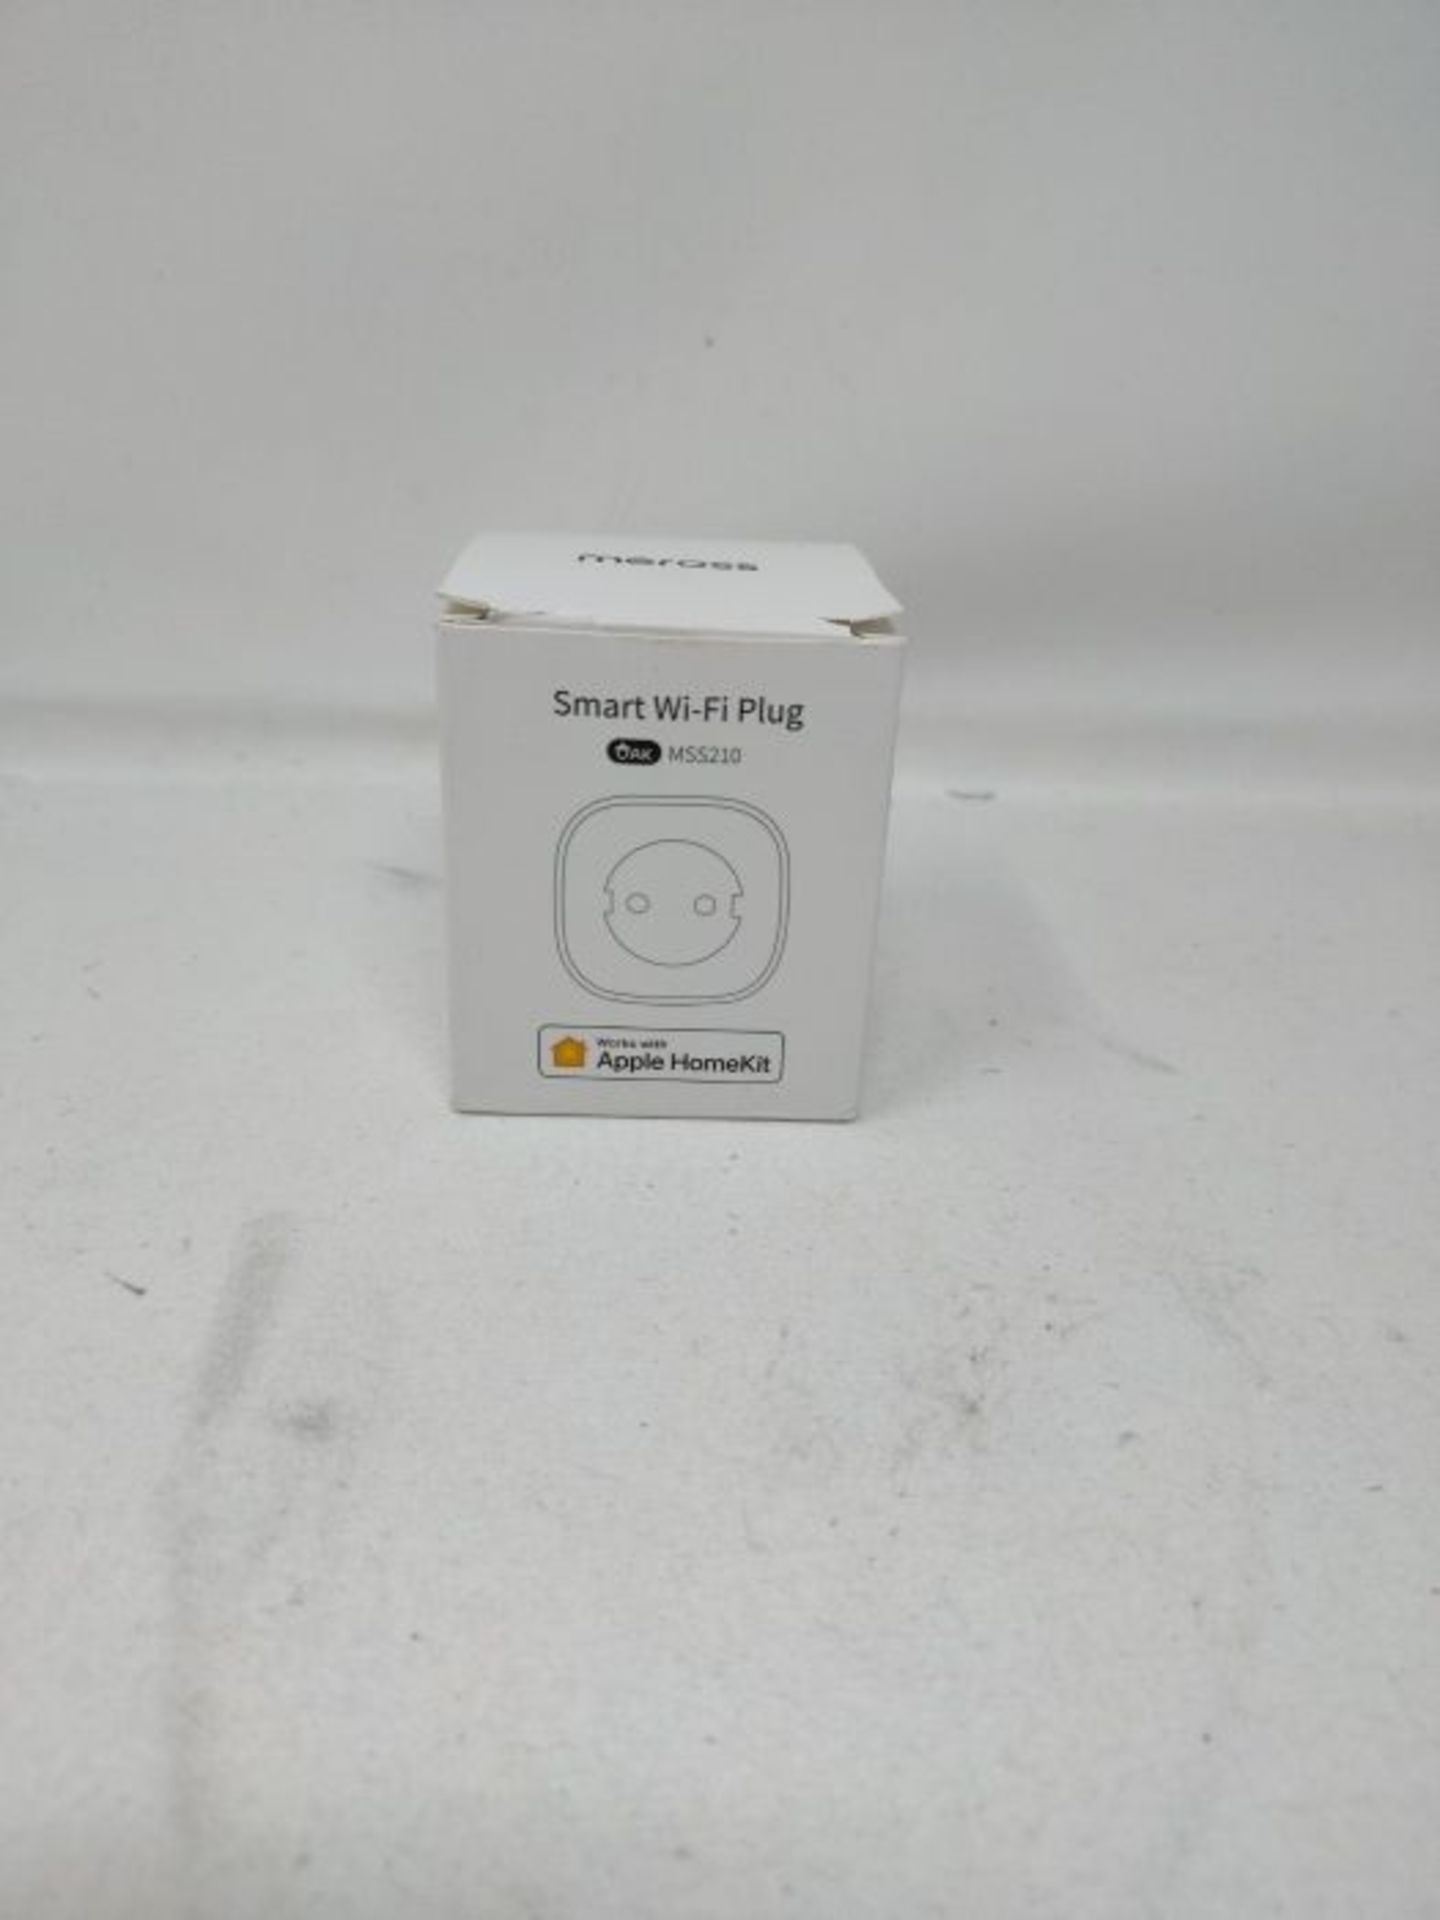 WLAN socket works with Apple HomeKit, meross Smart Plug, compatible with Siri, Alexa,